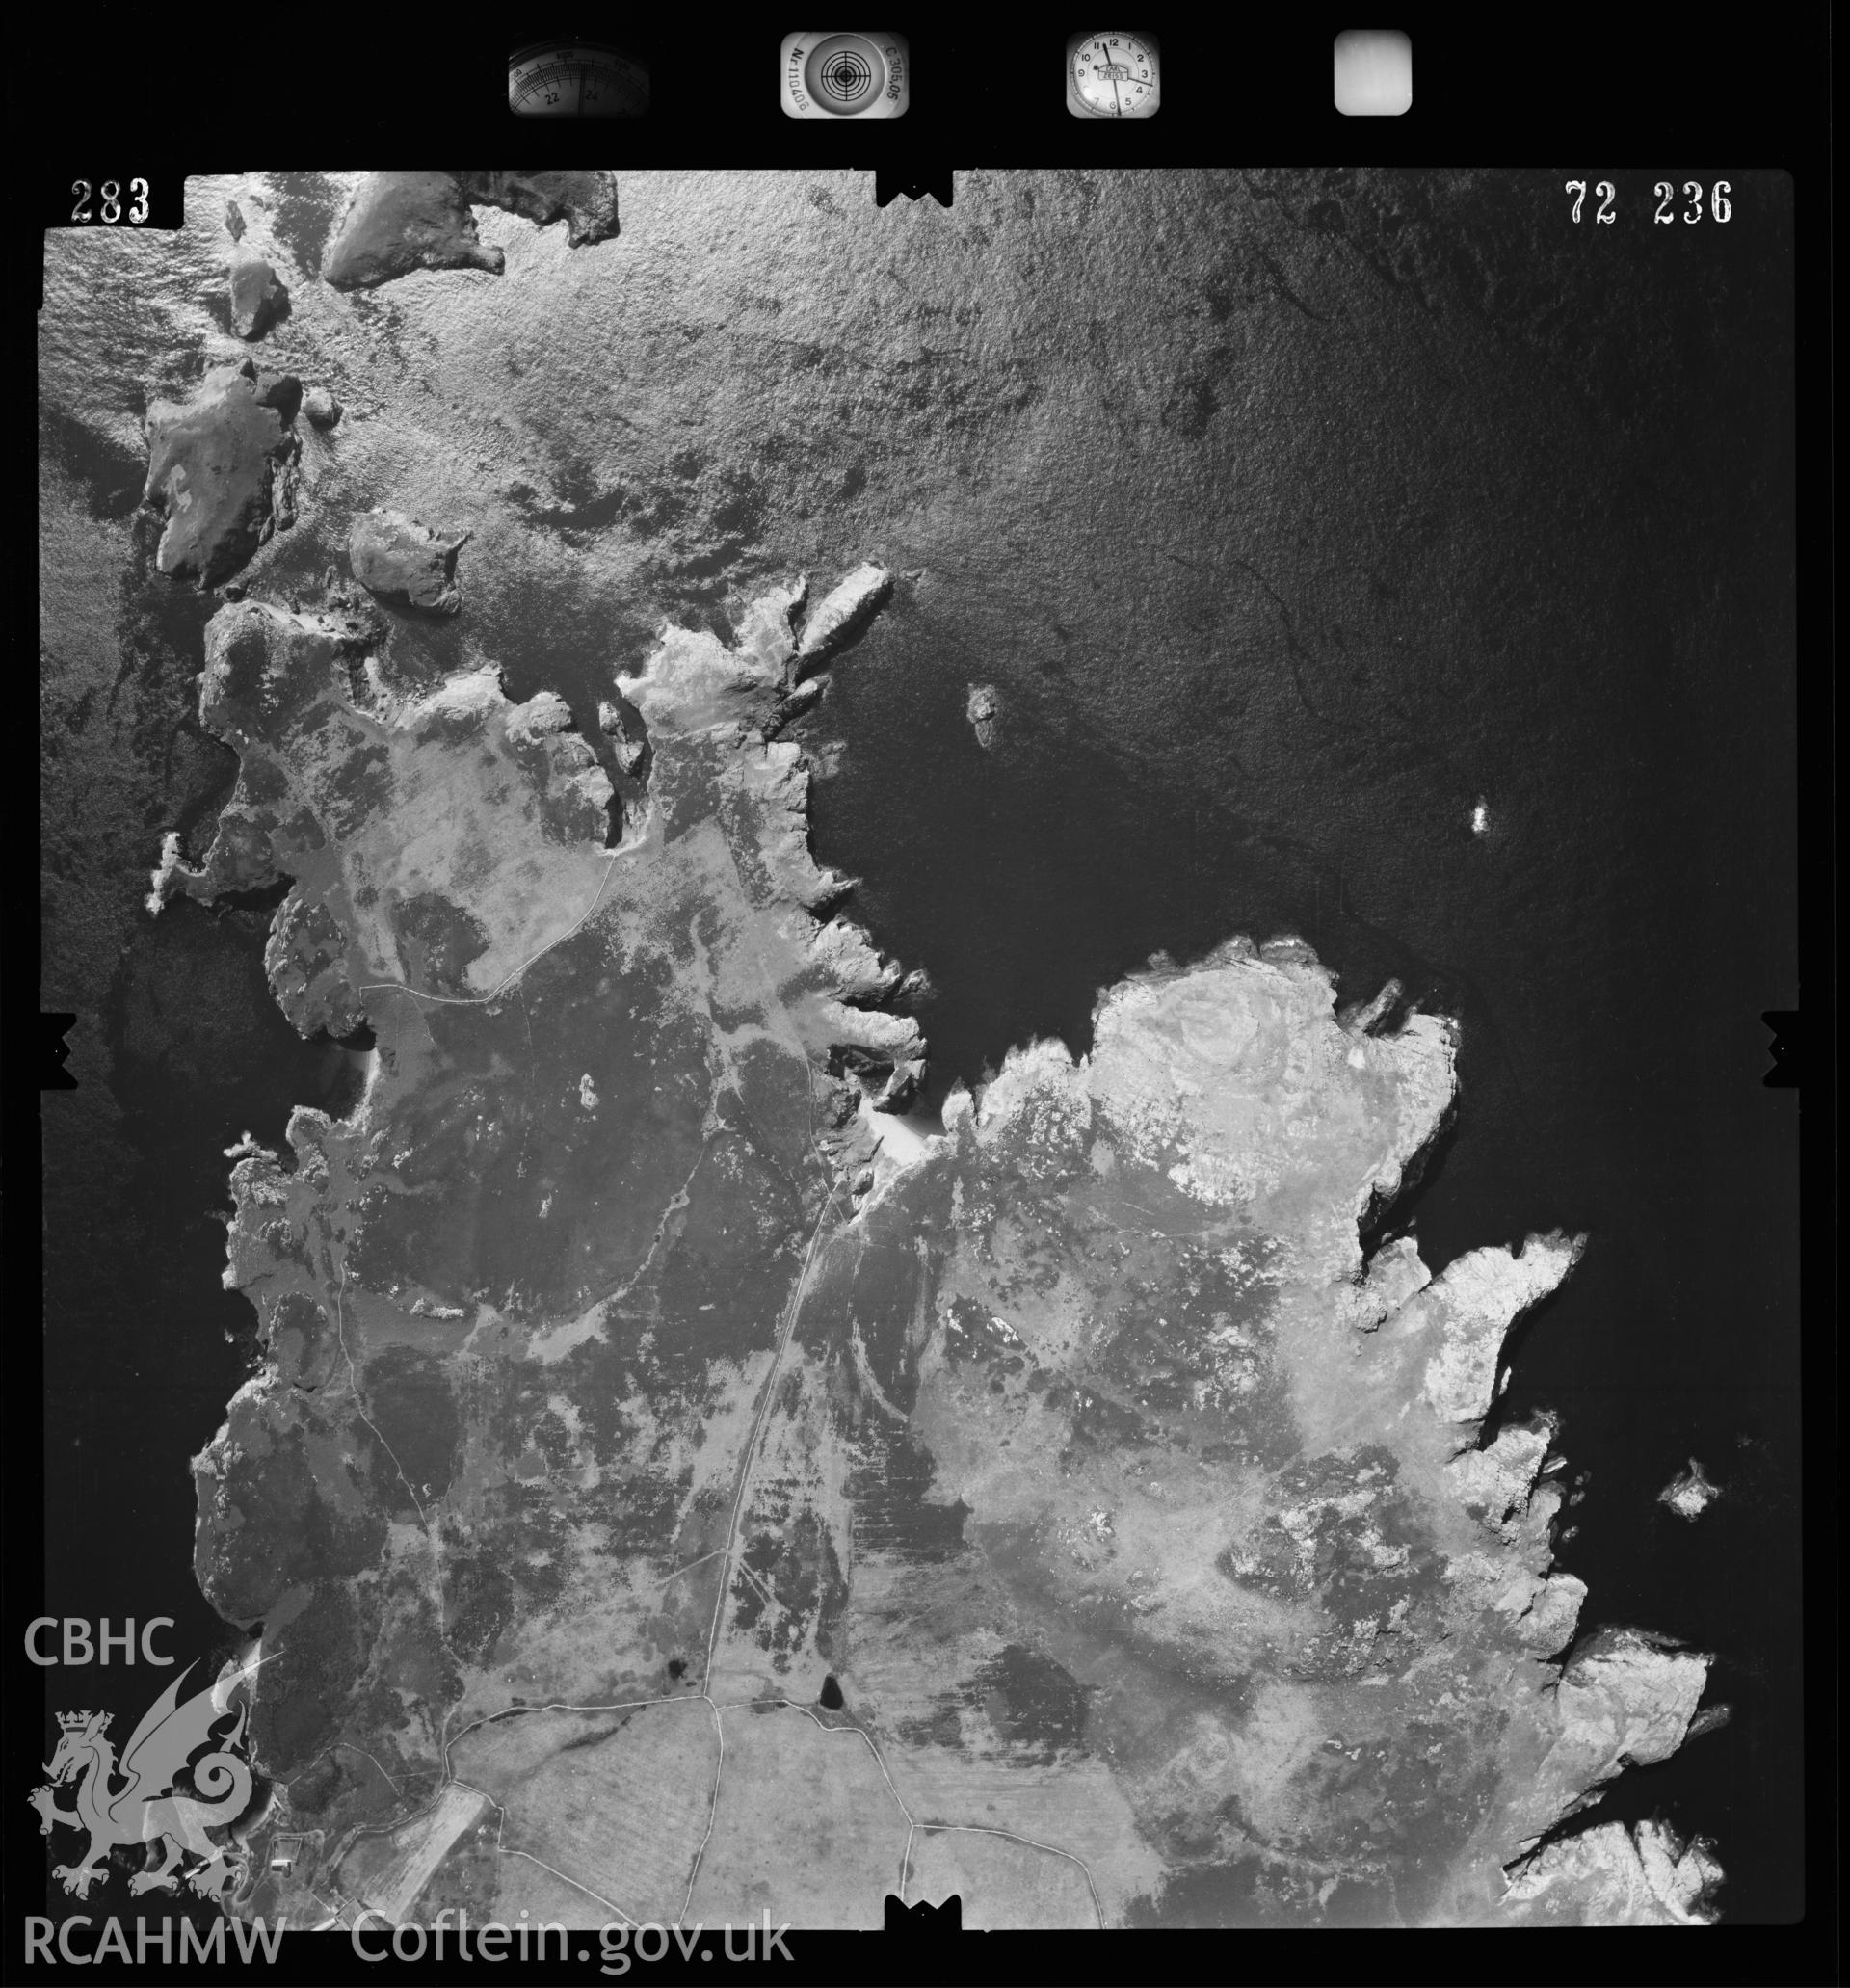 Digital copy of an aerial view of Ramsey Island taken by Ordnance Survey in 1972.